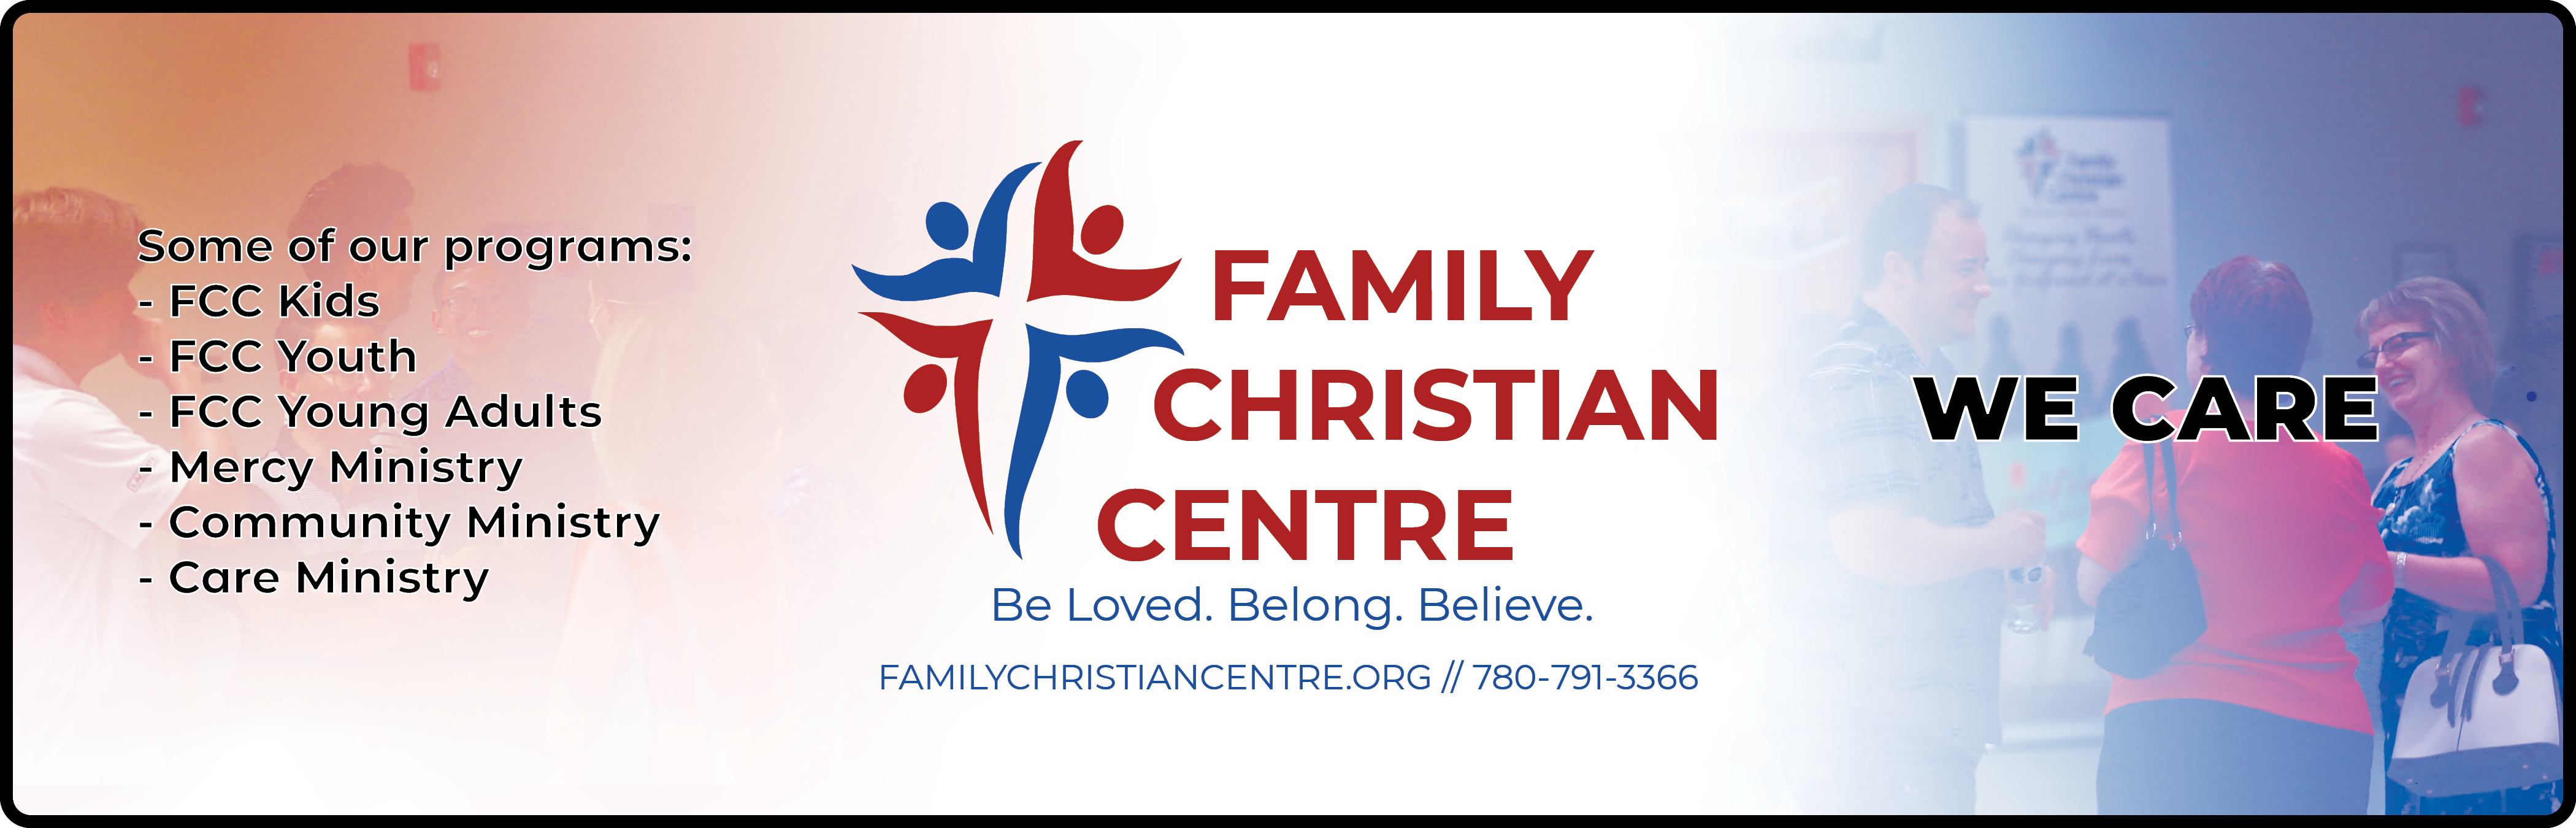 Family Christian Centre